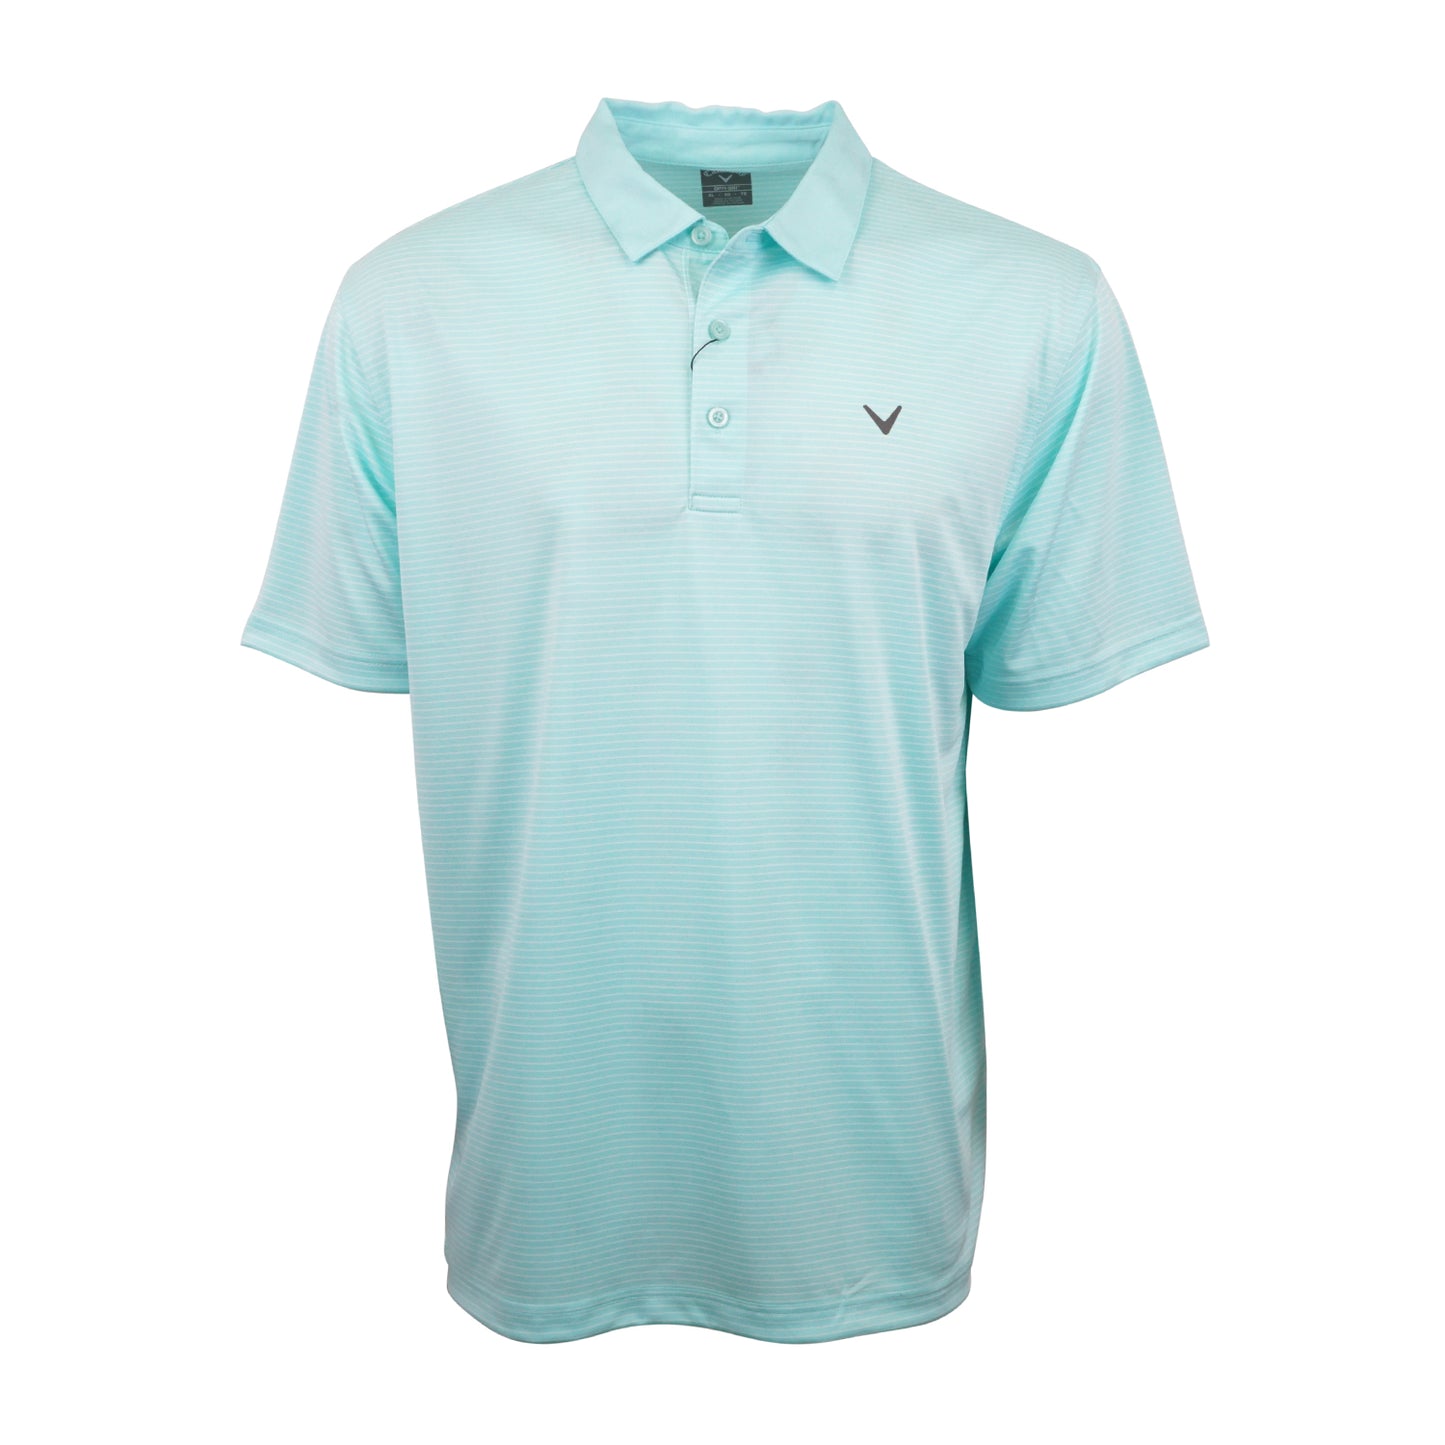 Callaway Golf Aruba Polo Golf Shirt